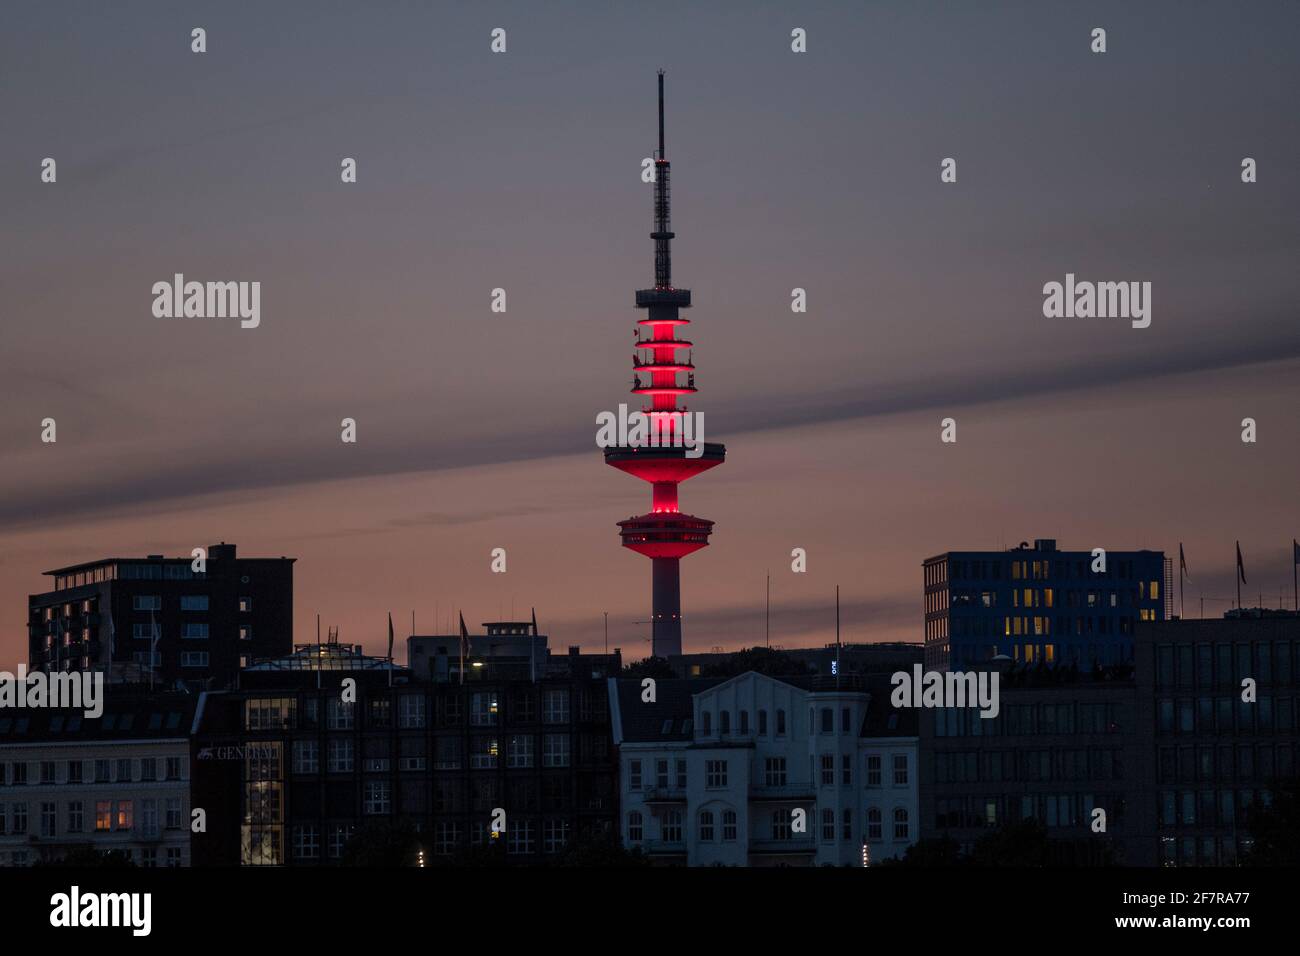 Der Hamburger Fernsehturm mit roter Beleuchtung bei Nacht. Stock Photo